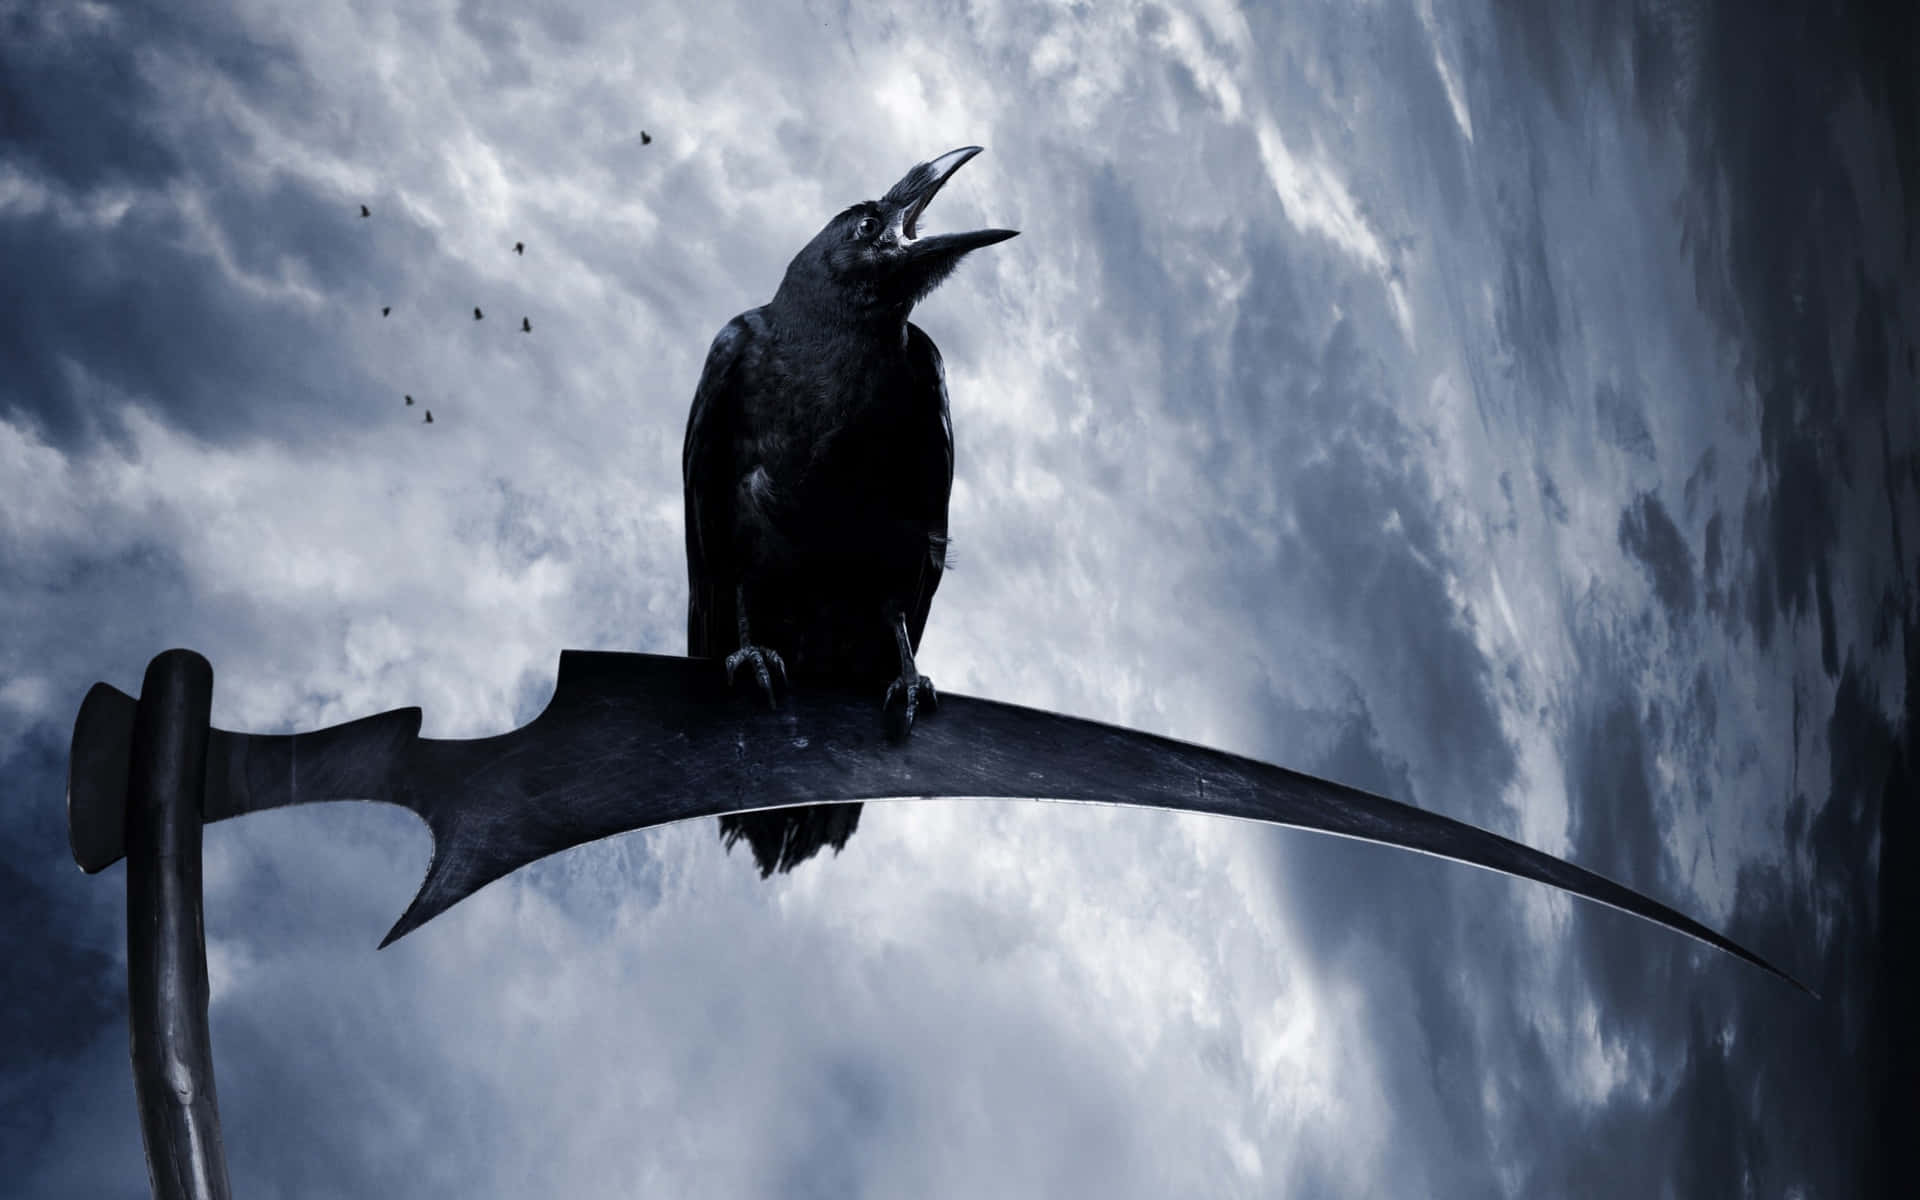 Leader of the flock – A Raven soaring high.